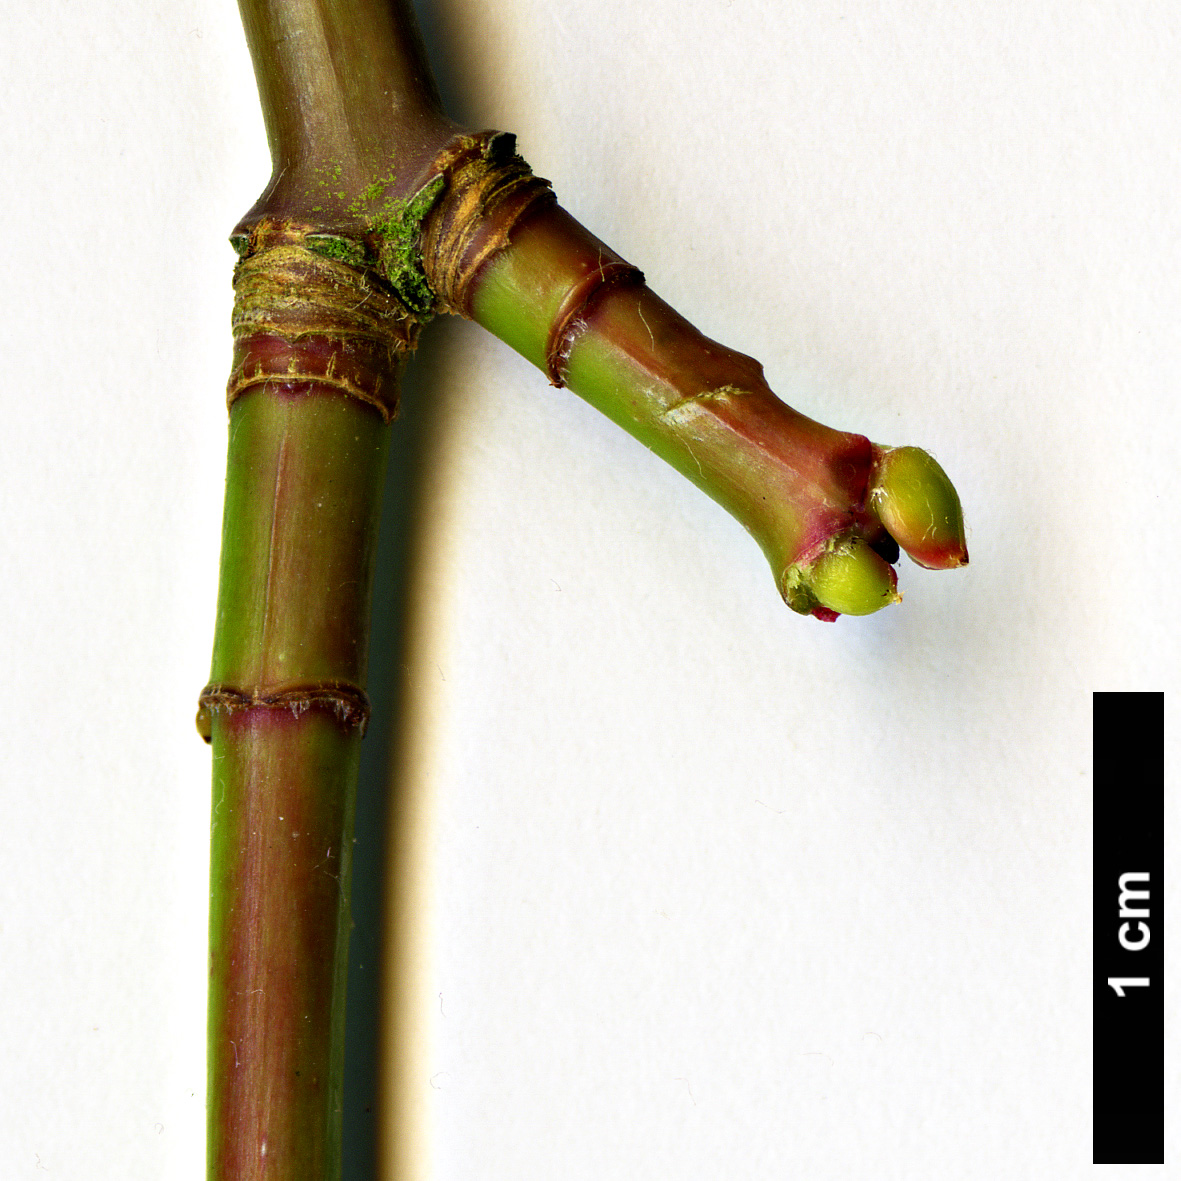 High resolution image: Family: Sapindaceae - Genus: Acer - Taxon: campbellii